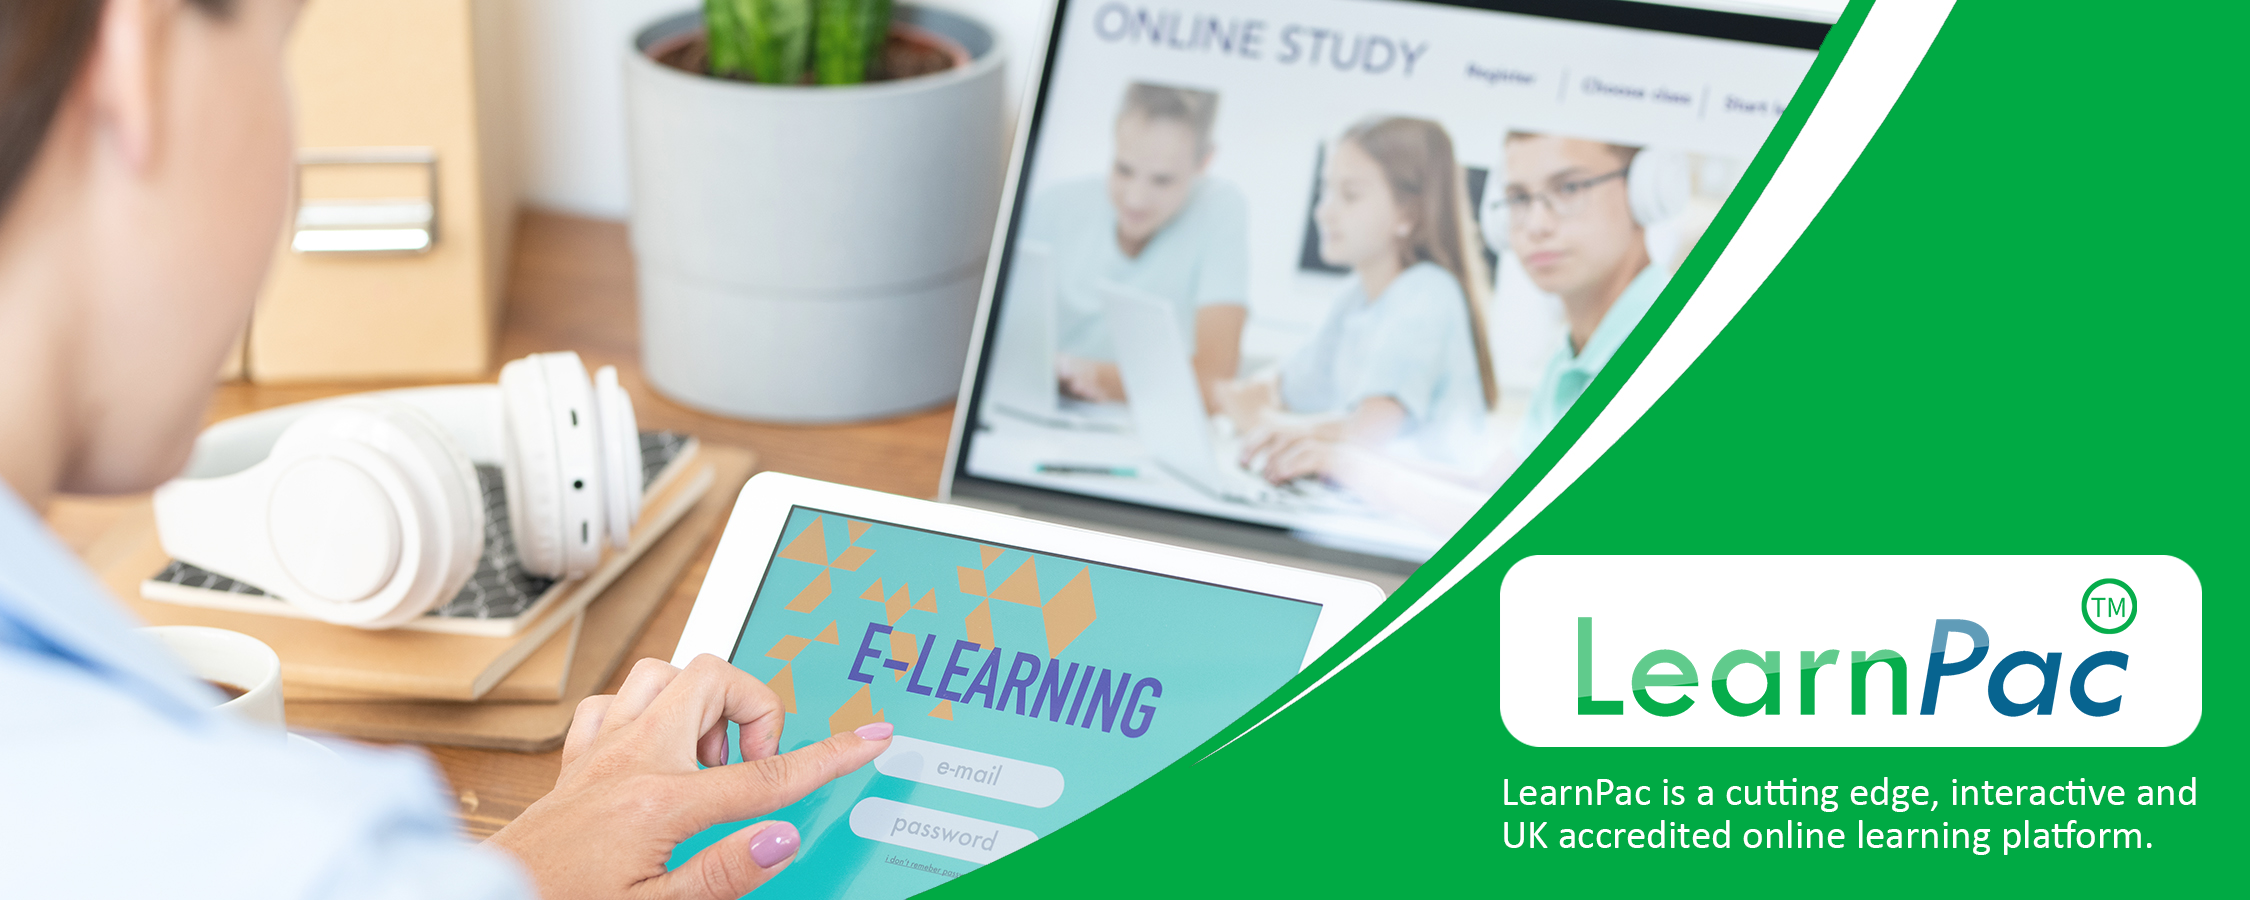 Mandatory Training for Doctors - Online Learning Courses - E-Learning Courses - LearnPac Systems UK -